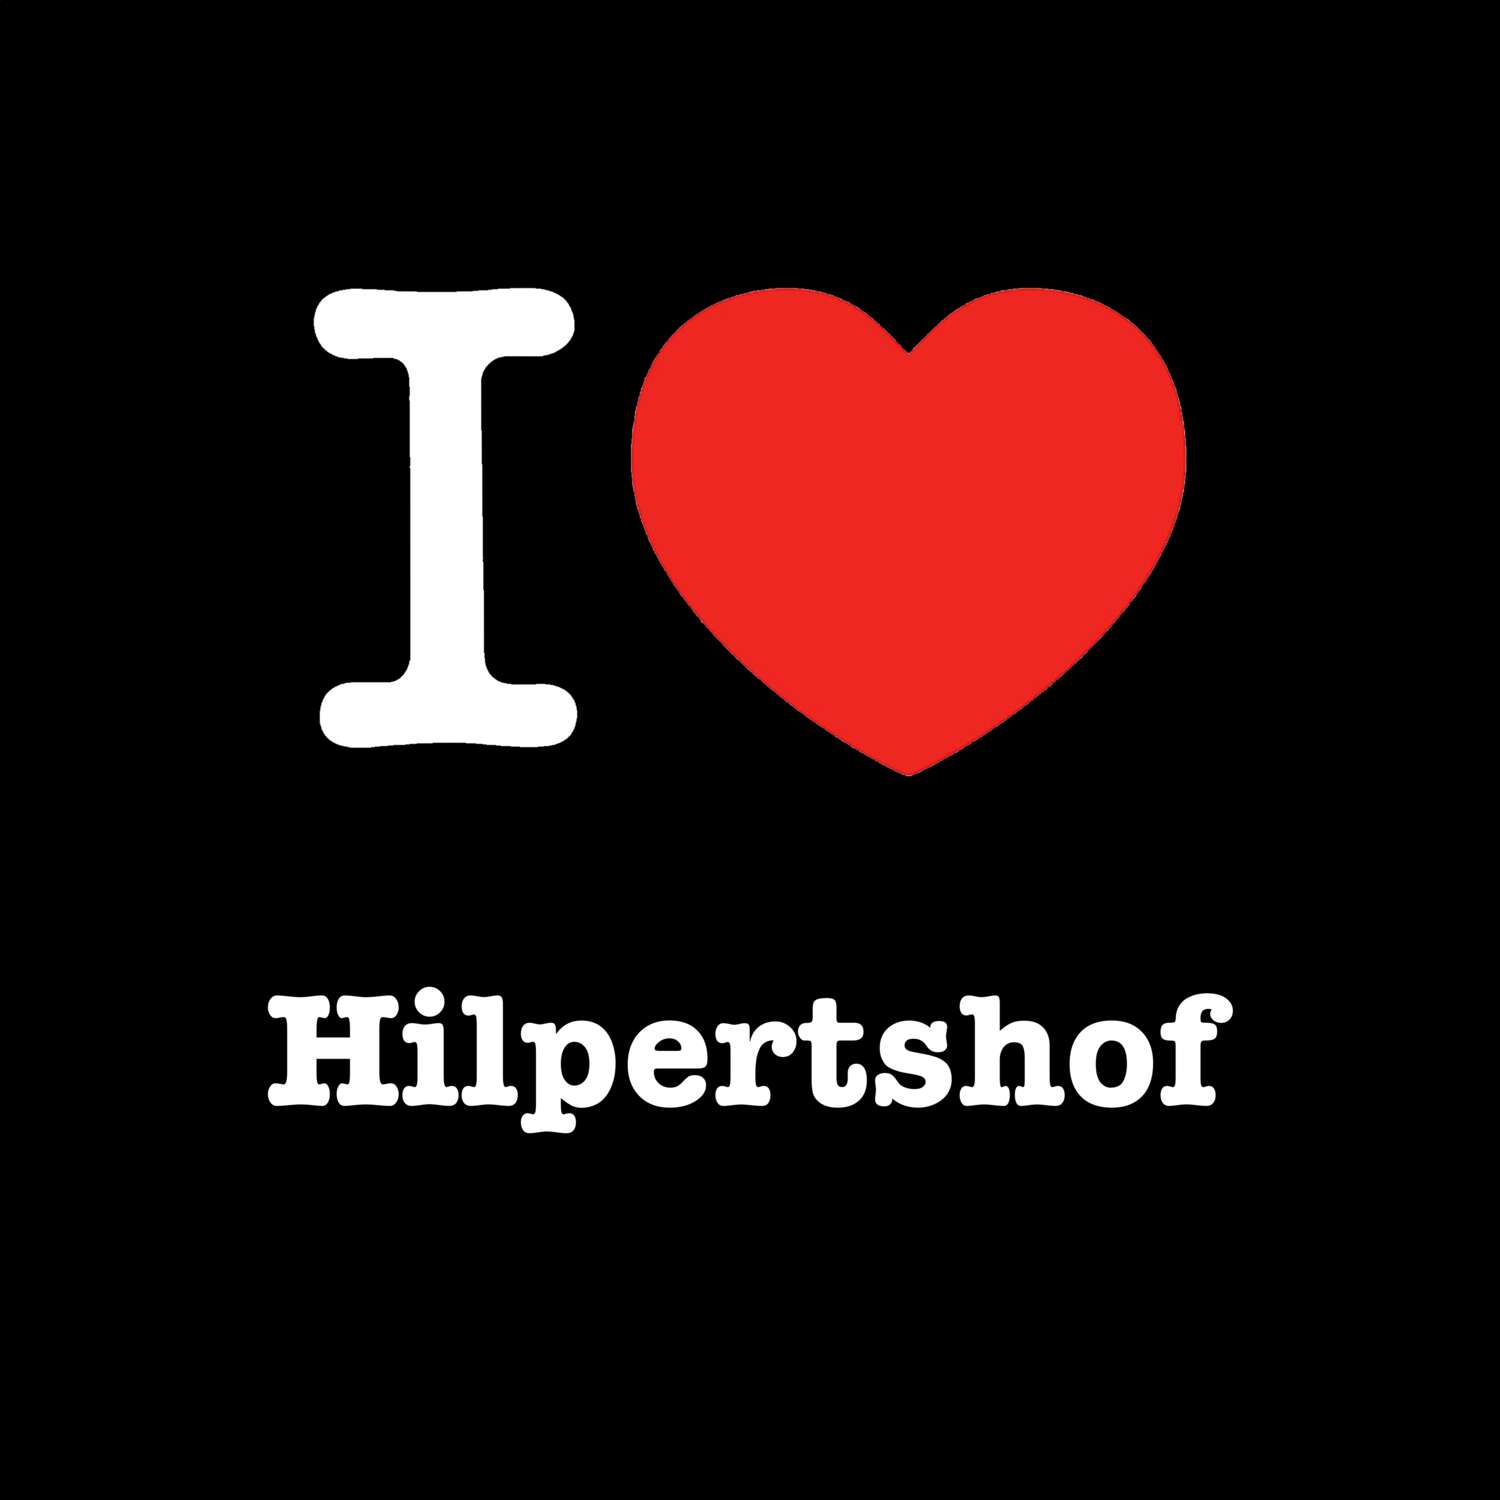 Hilpertshof T-Shirt »I love«